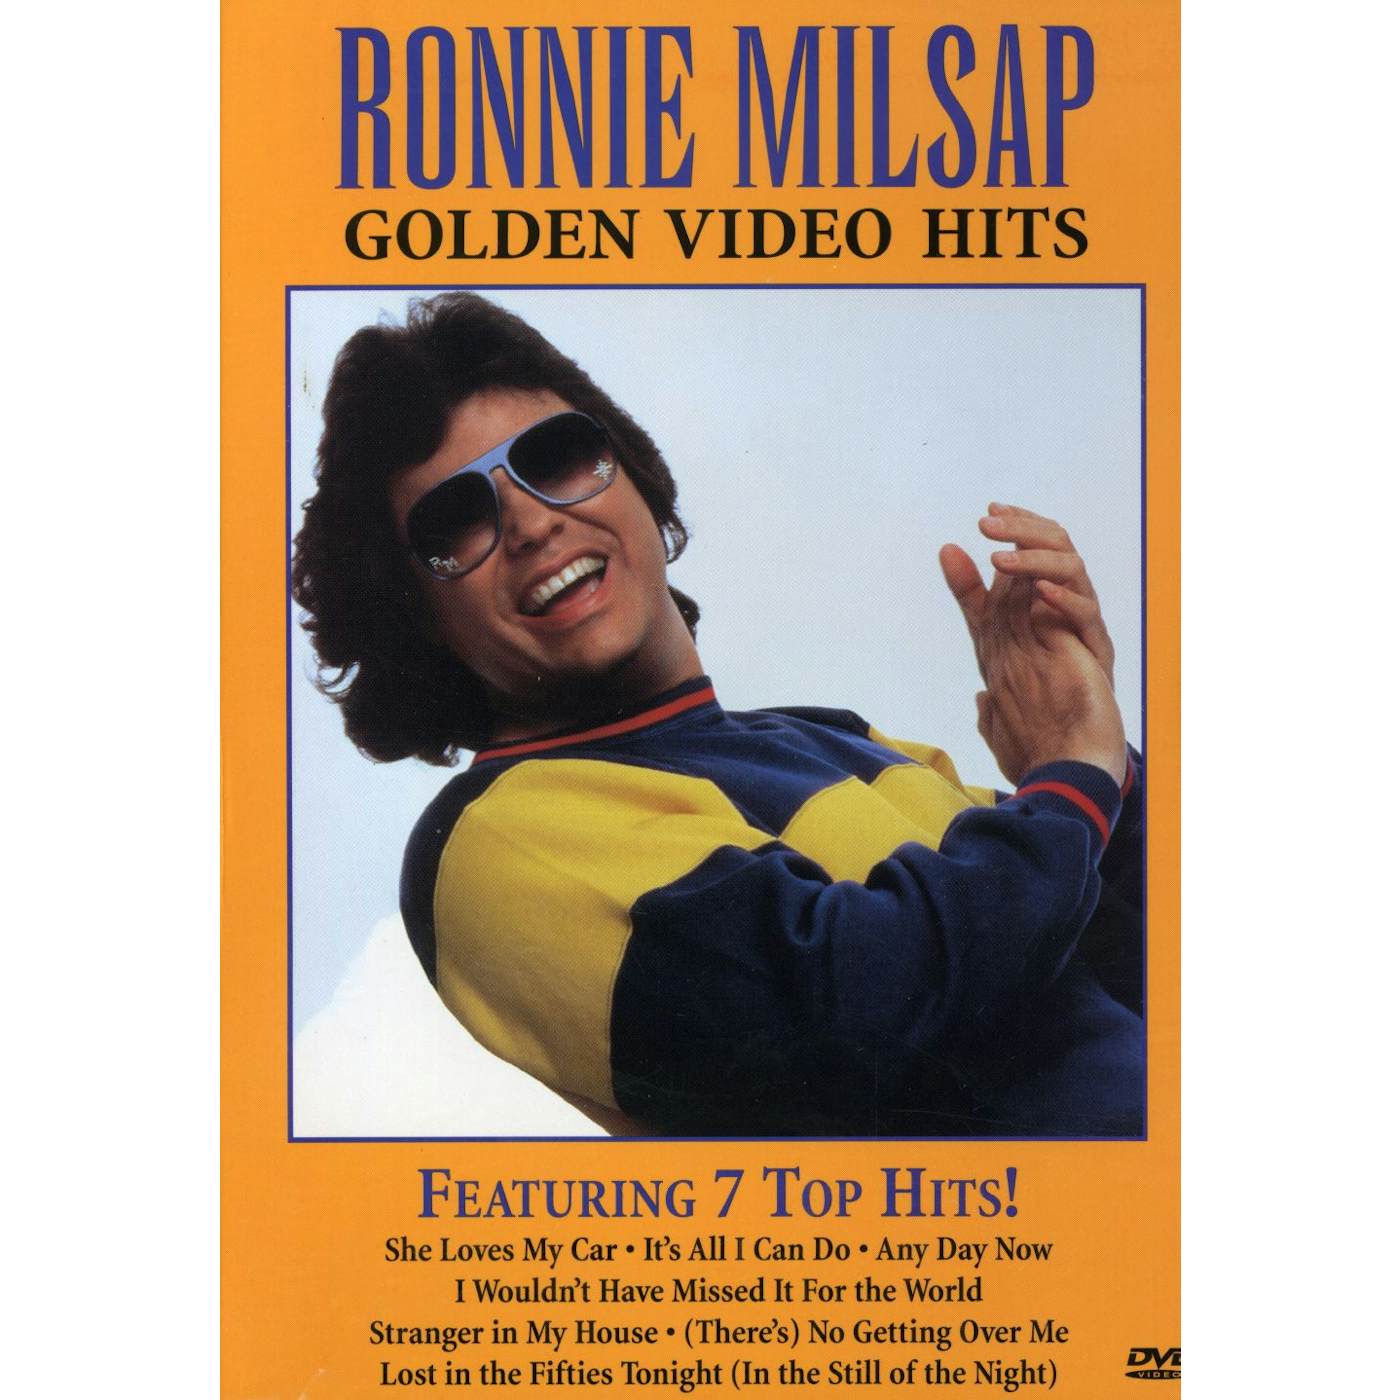 Ronnie Milsap GOLDEN VIDEO HITS DVD